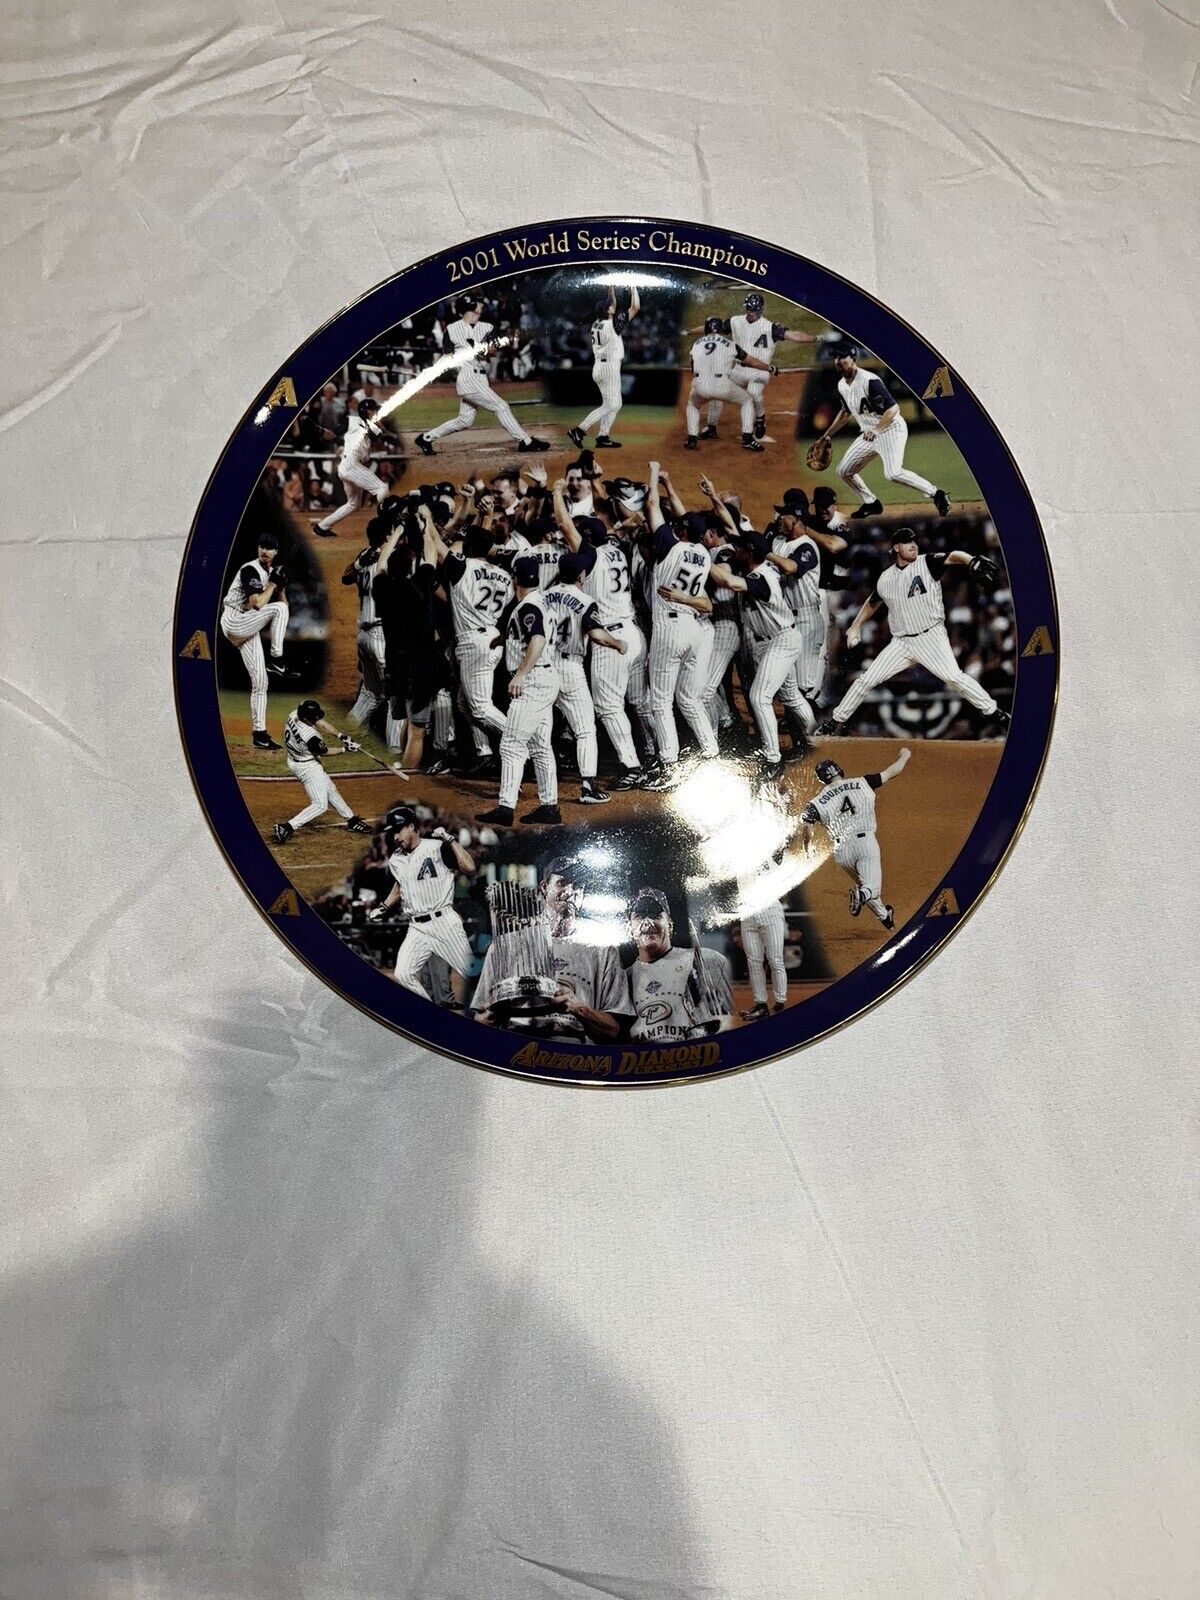 Arizona Diamondbacks 2001 world series collectors plate